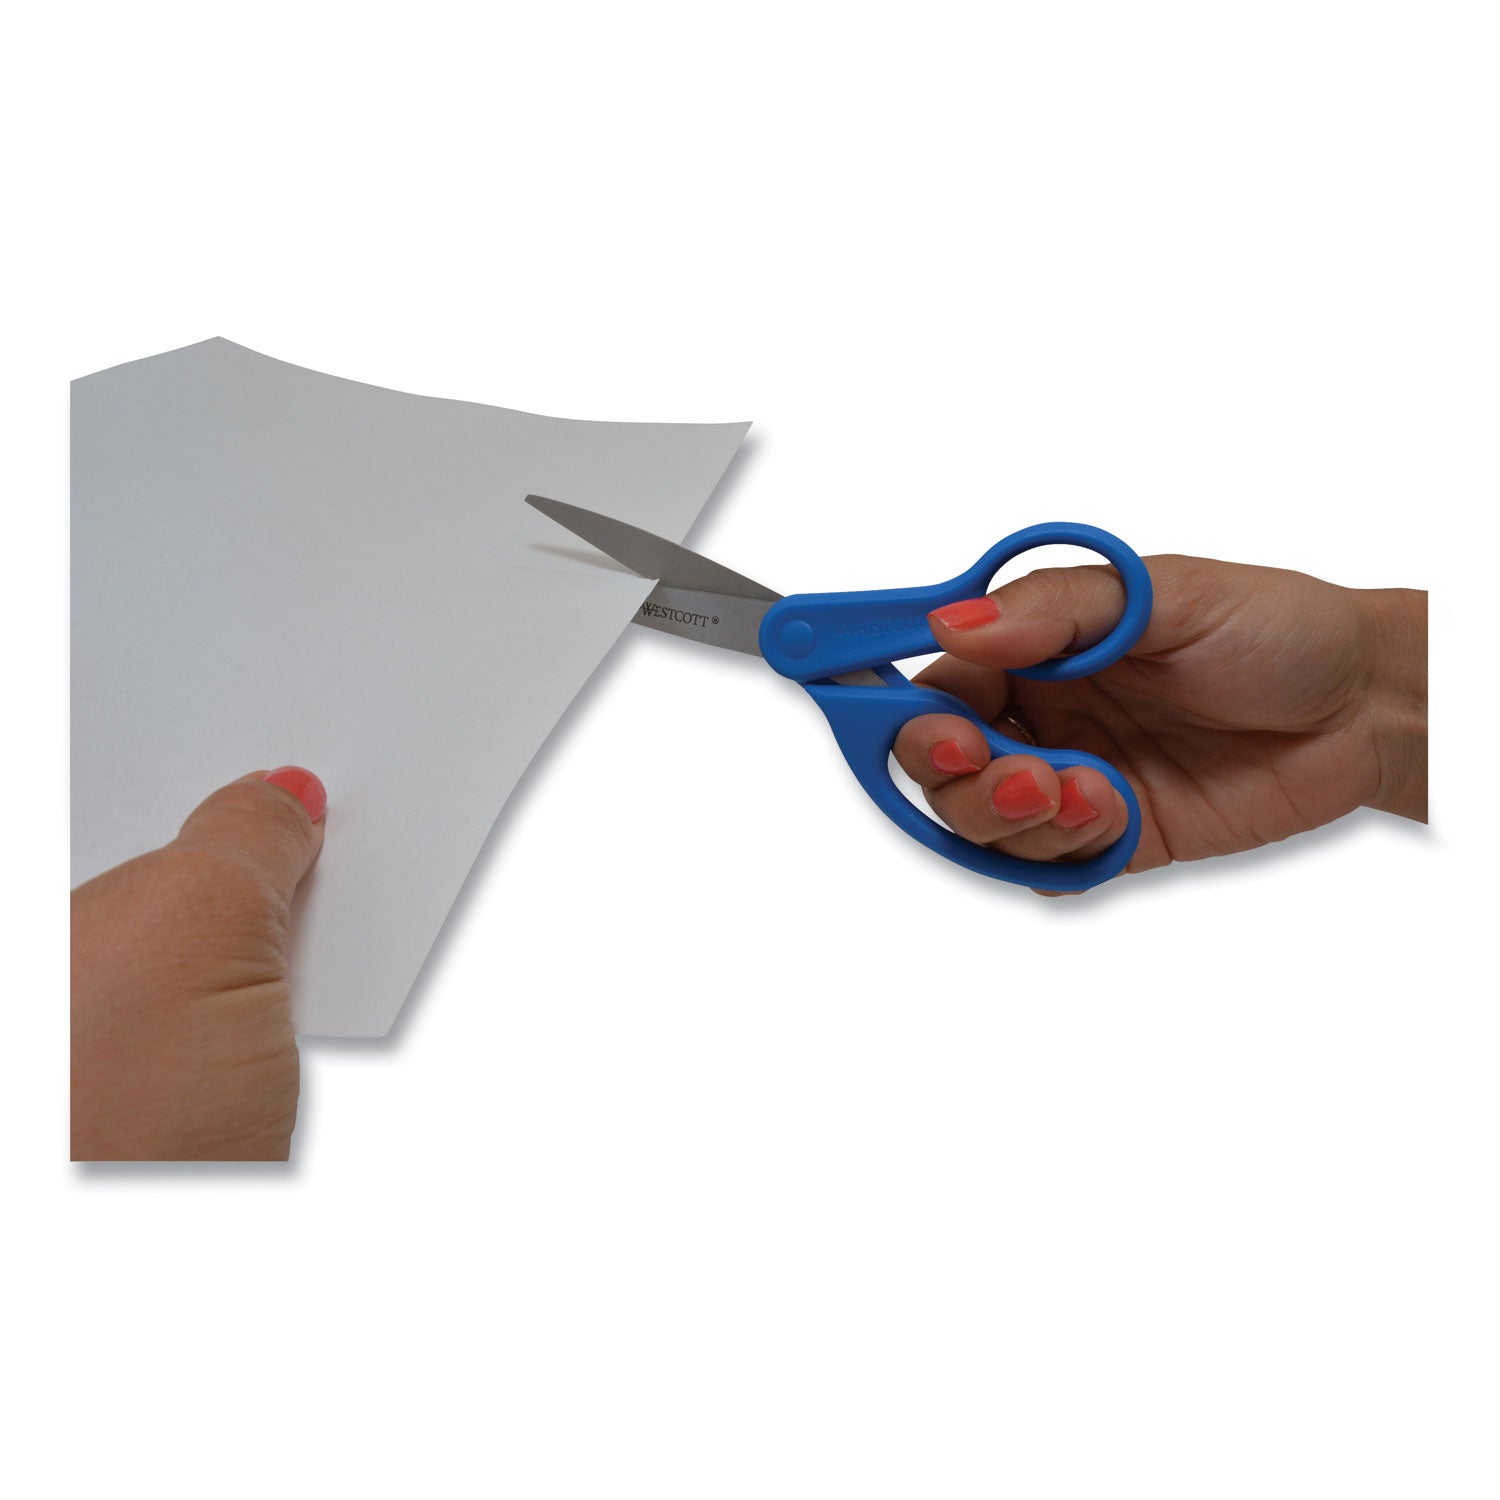 Preferred Line Stainless Steel Scissors, 8" Long, 3.5" Cut Length, Blue Straight Handle - 